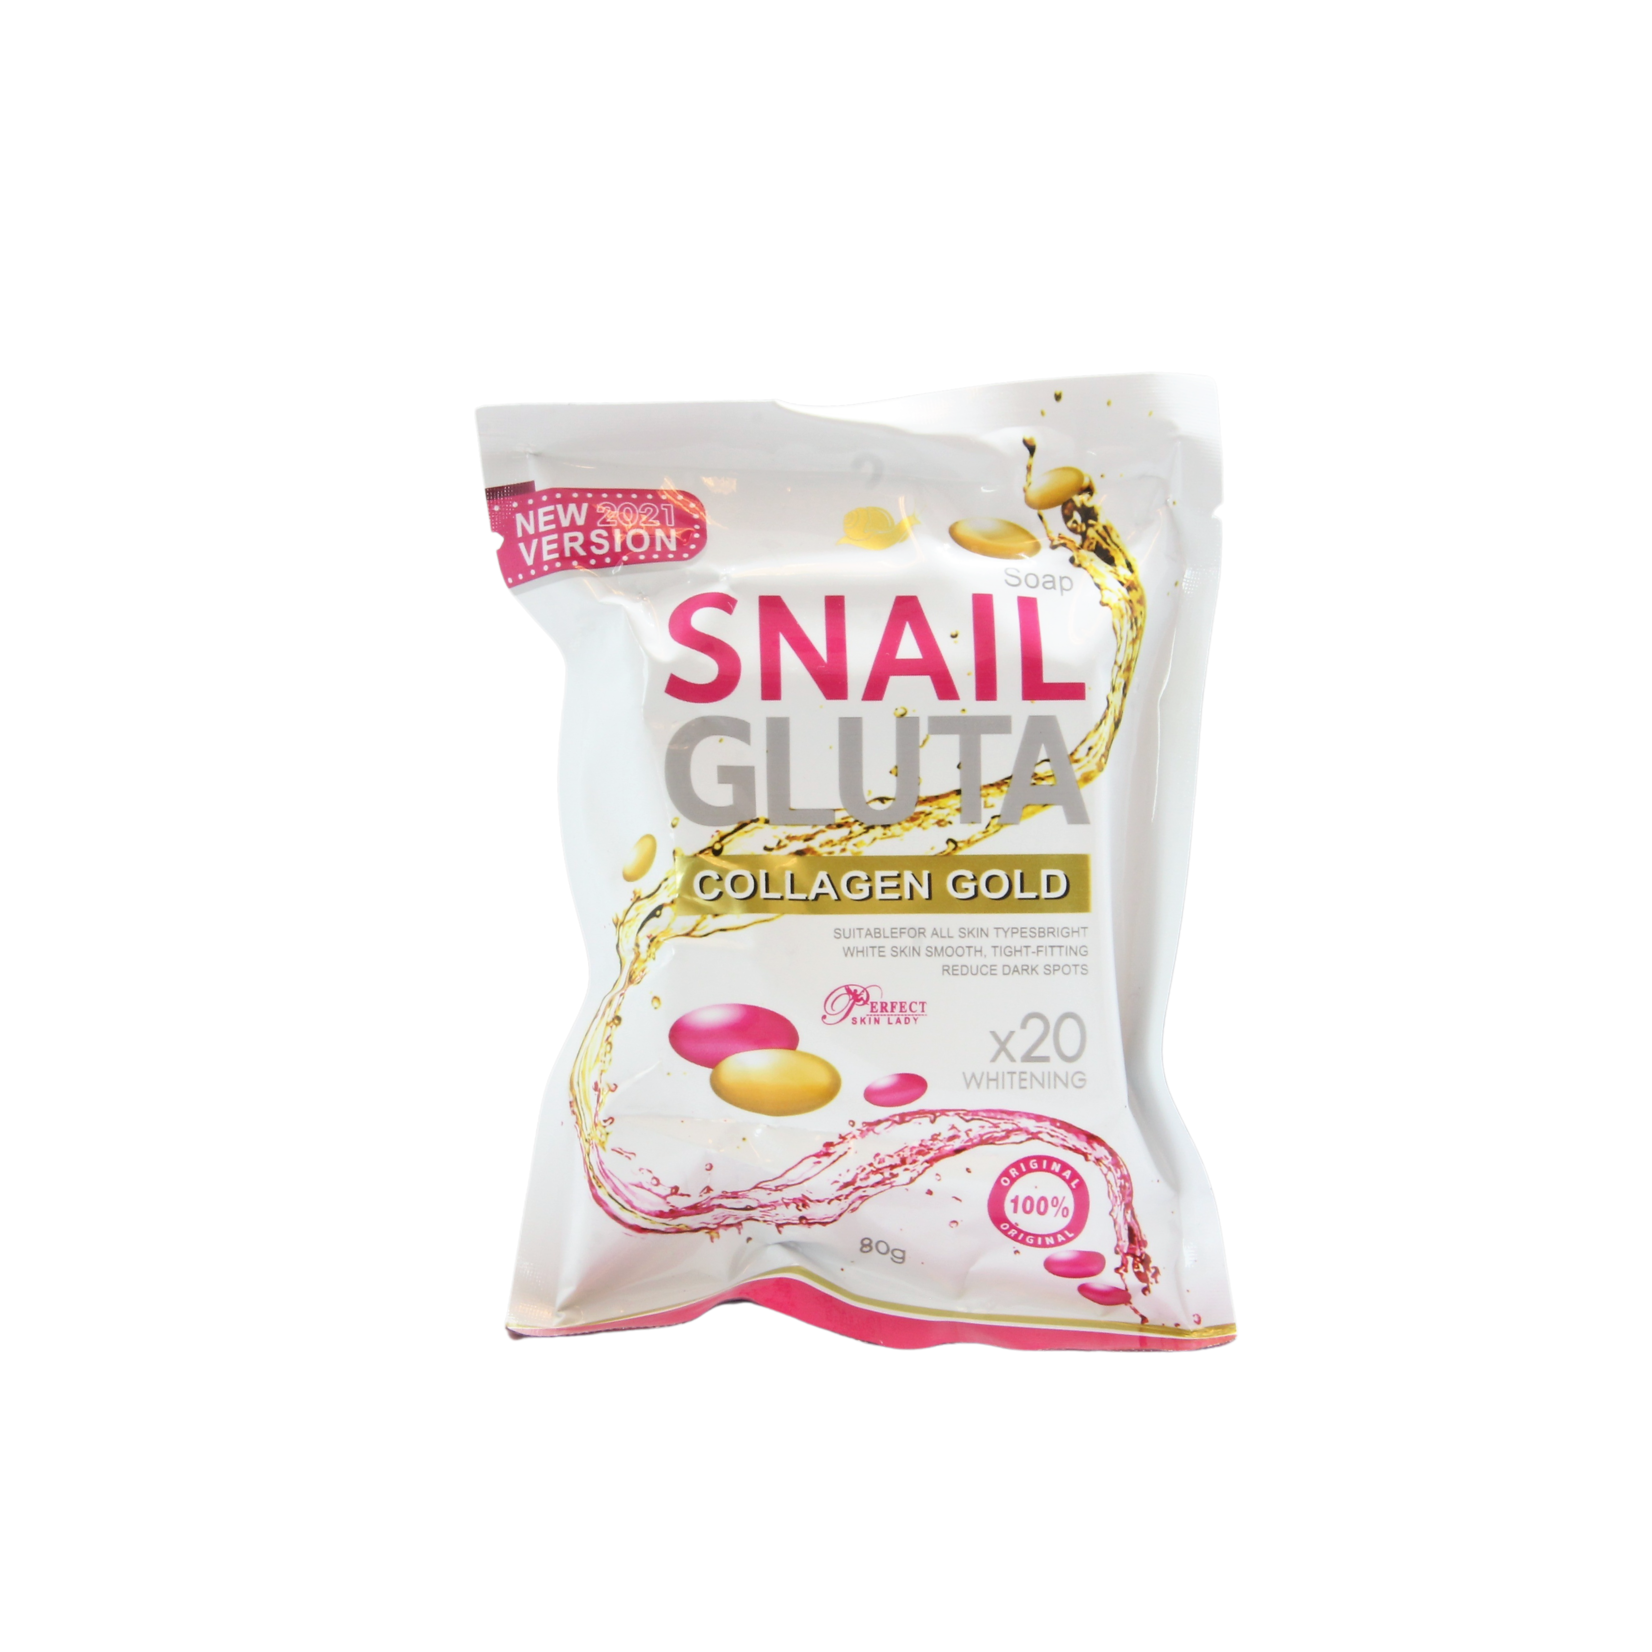 Snail White, laat je stralen als een engel! Snail White  zeep collagen Gold 80 gram